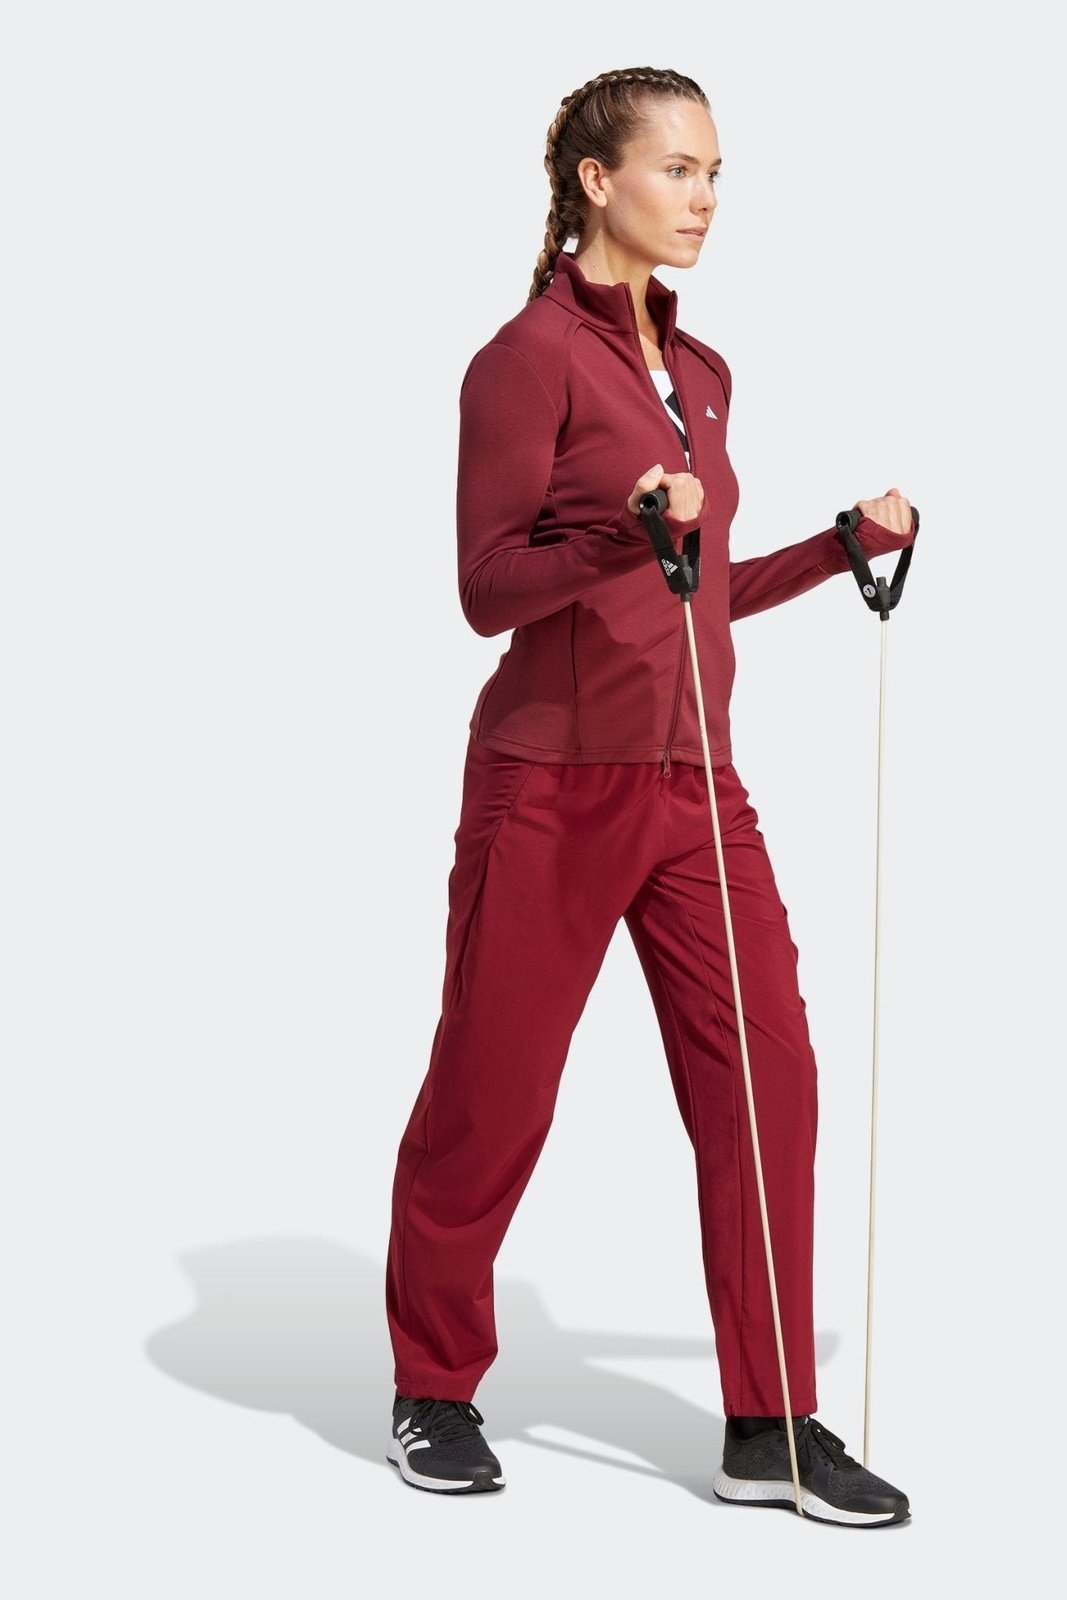 ADIDAS - מכנסיים ארוכים לנשים TRN בצבע אדום - MASHBIR//365